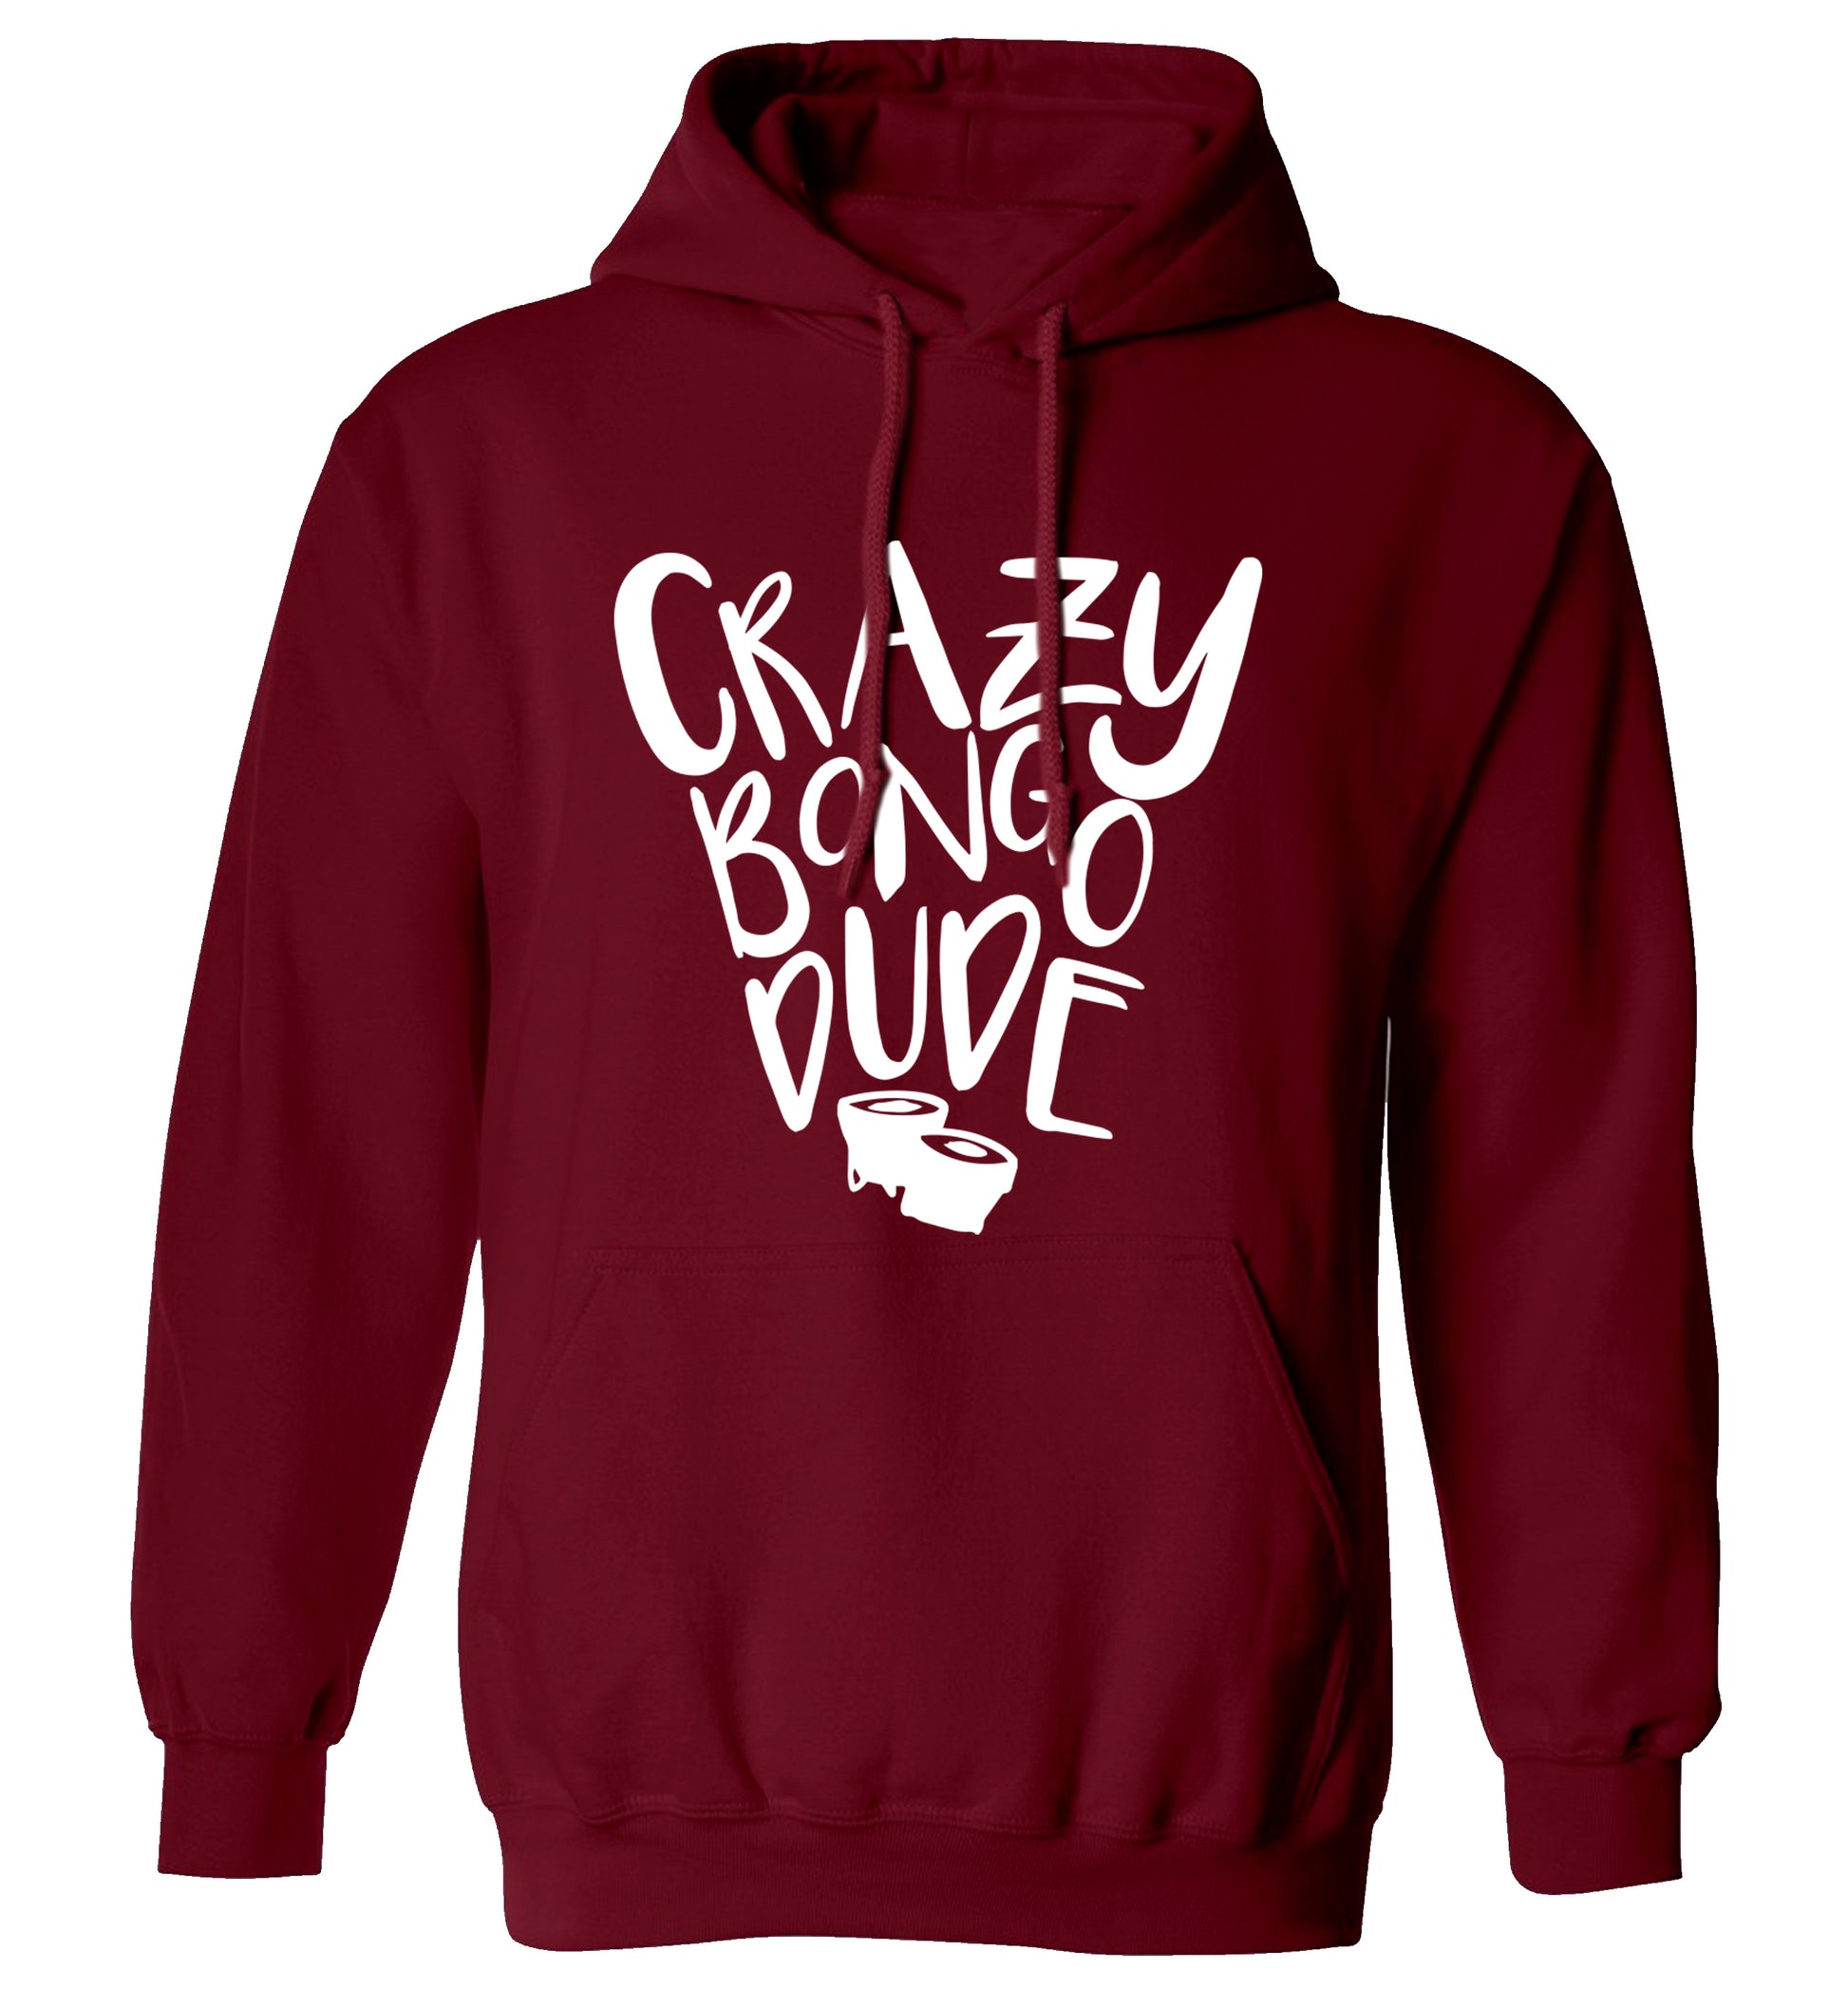 Crazy bongo dude adults unisex maroon hoodie 2XL